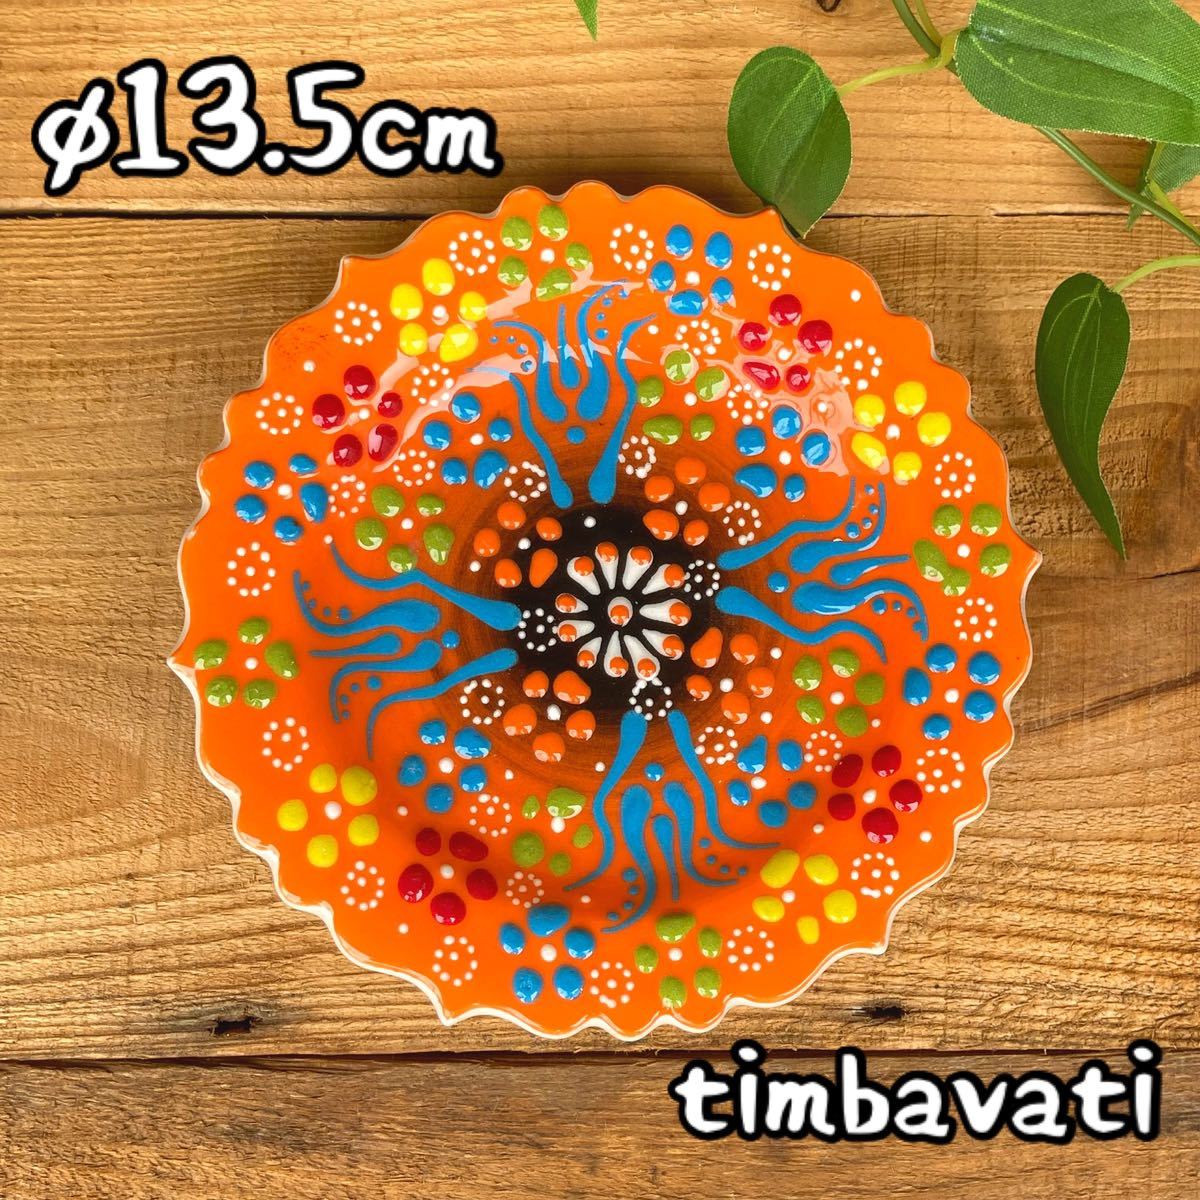 13.5cm* new goods * Turkey ceramics medium-sized dish small plate ornament * orange * hand made kyu tough ya ceramics 066